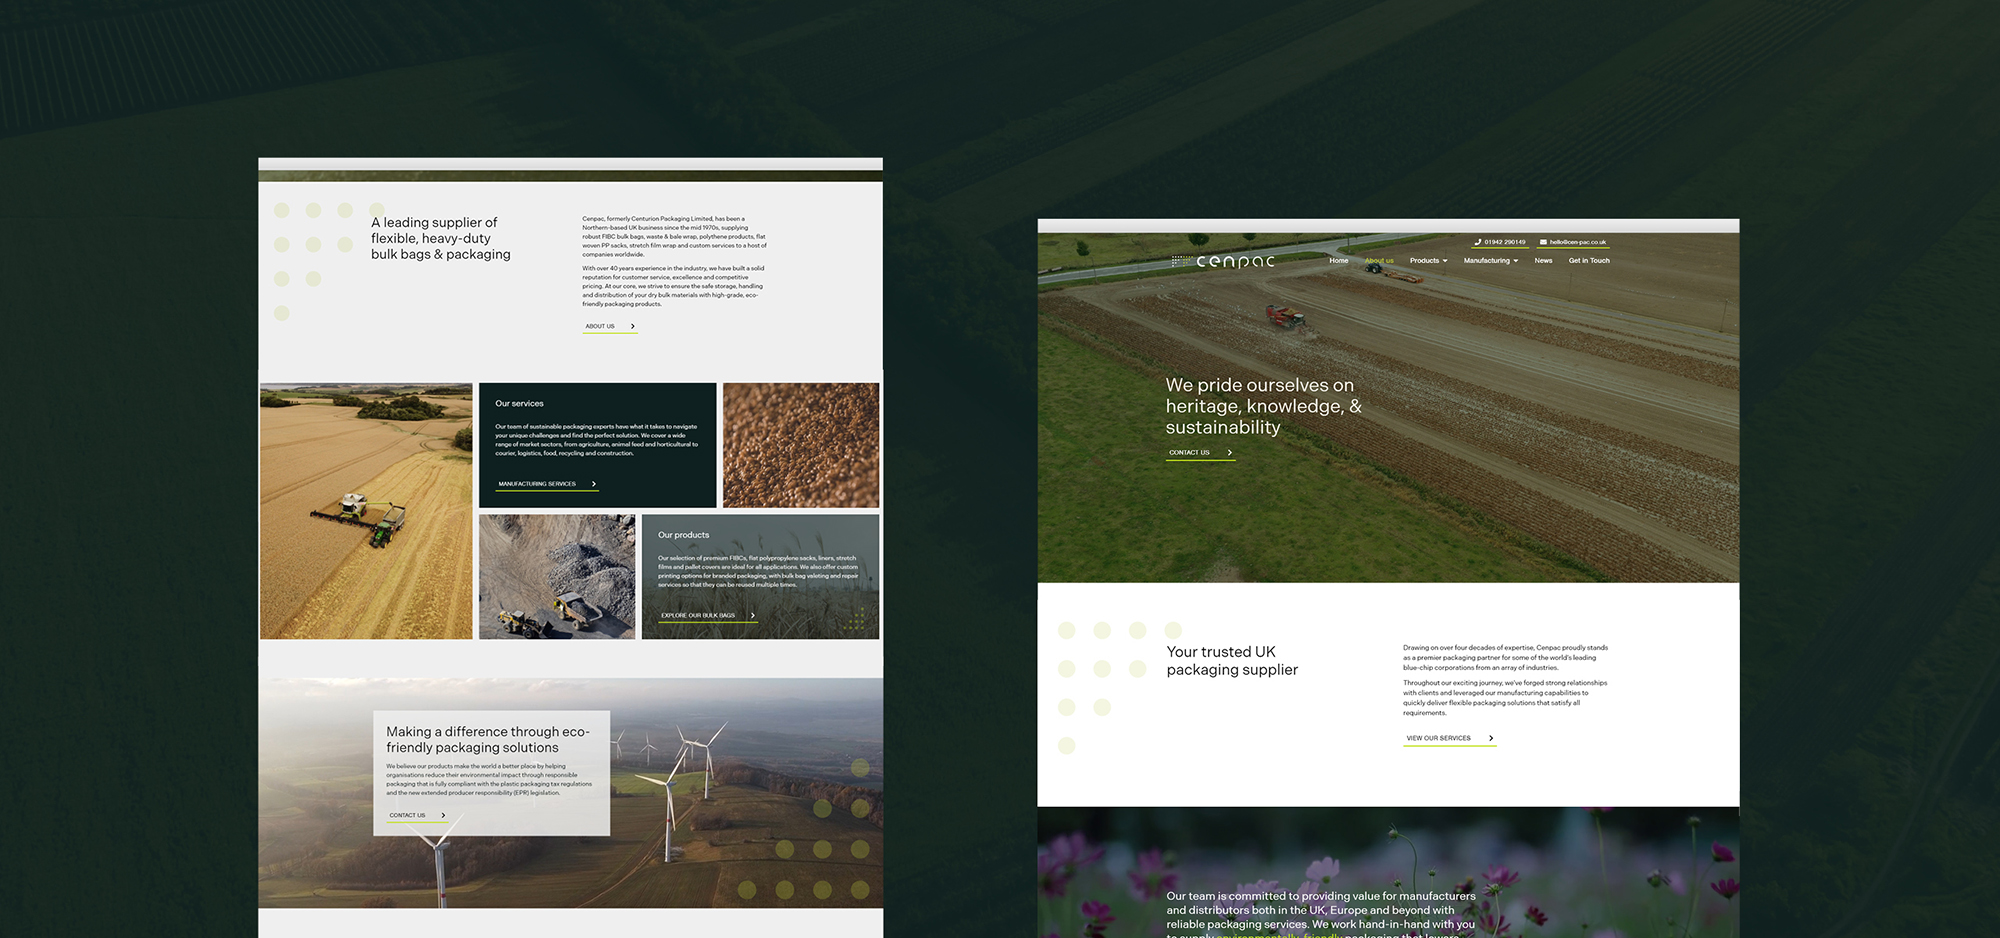 Versions of Cenpac website in desktop view